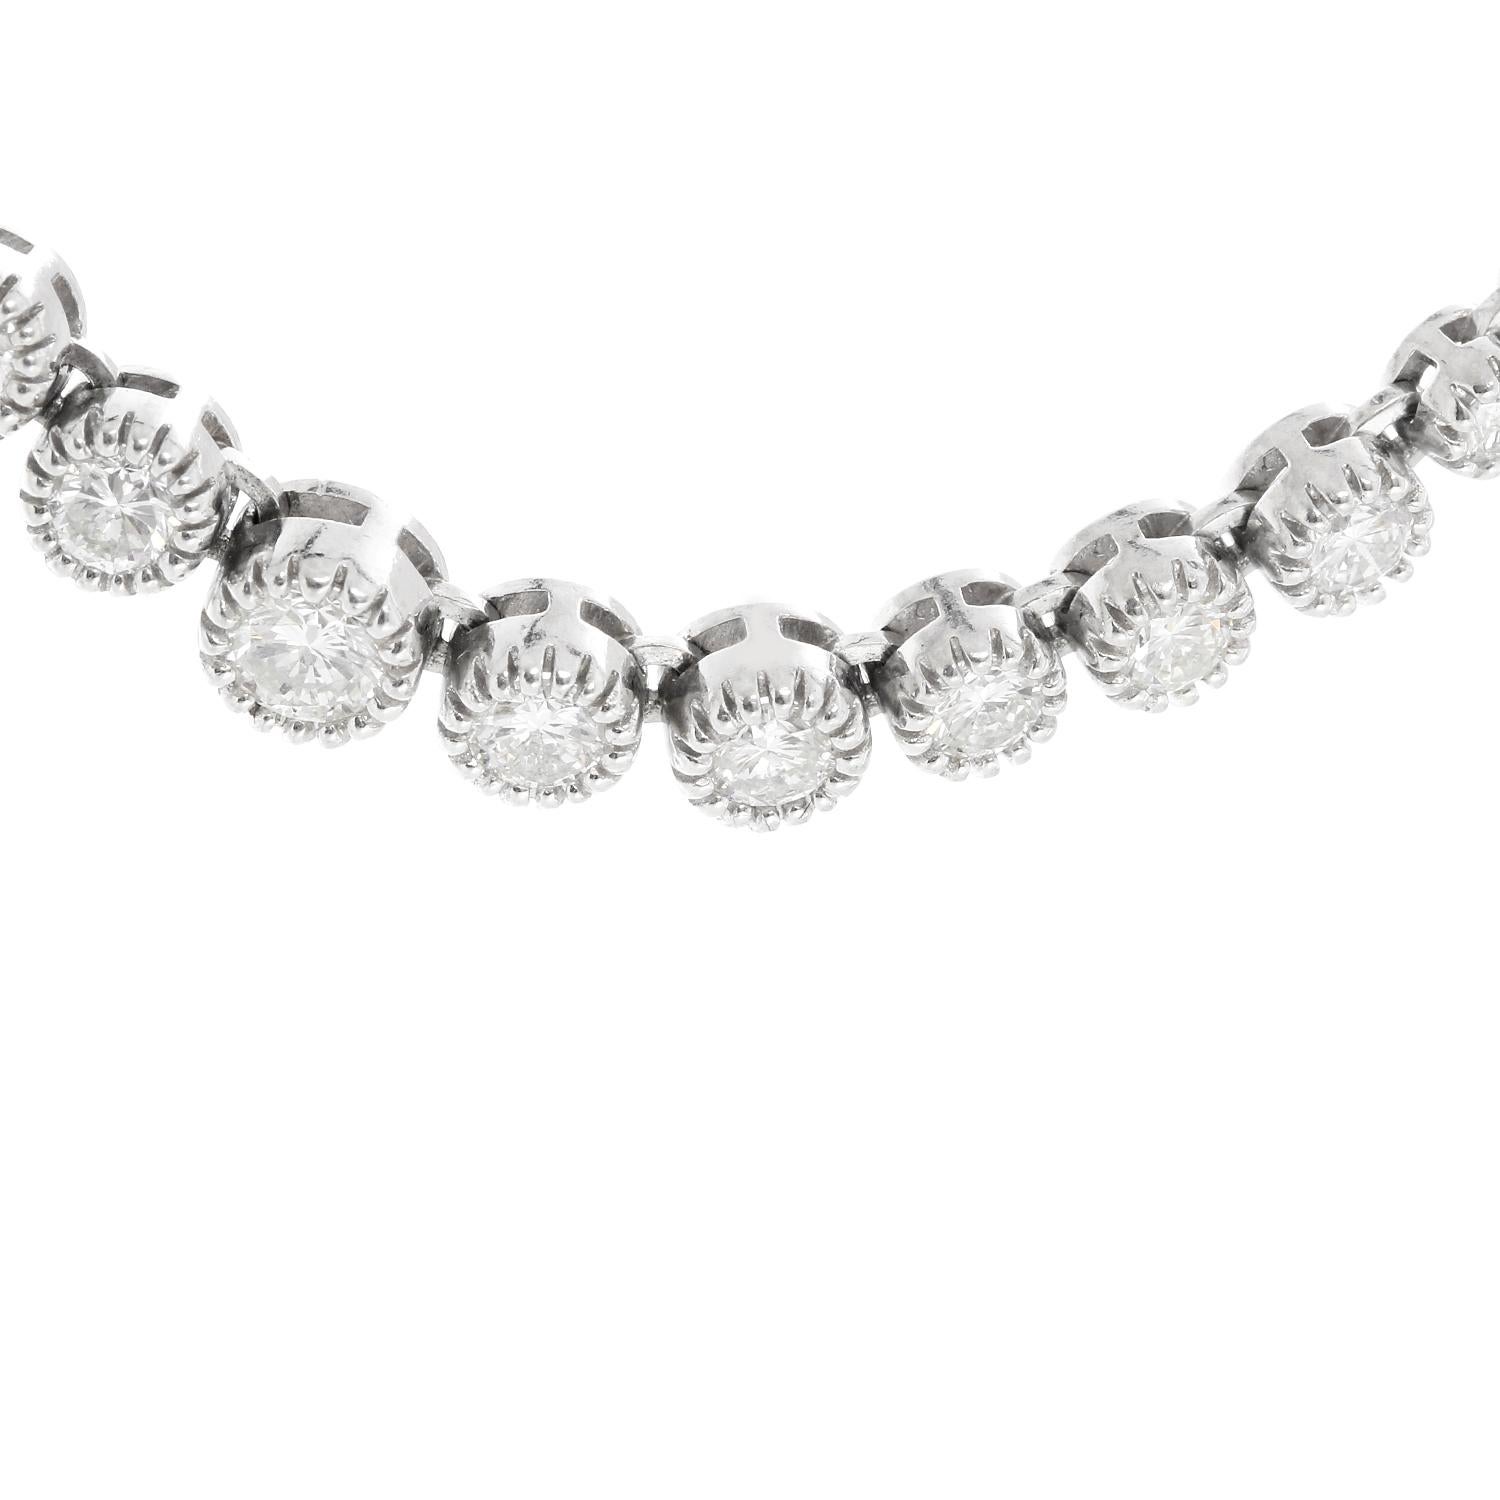 2 ct diamond tennis necklace